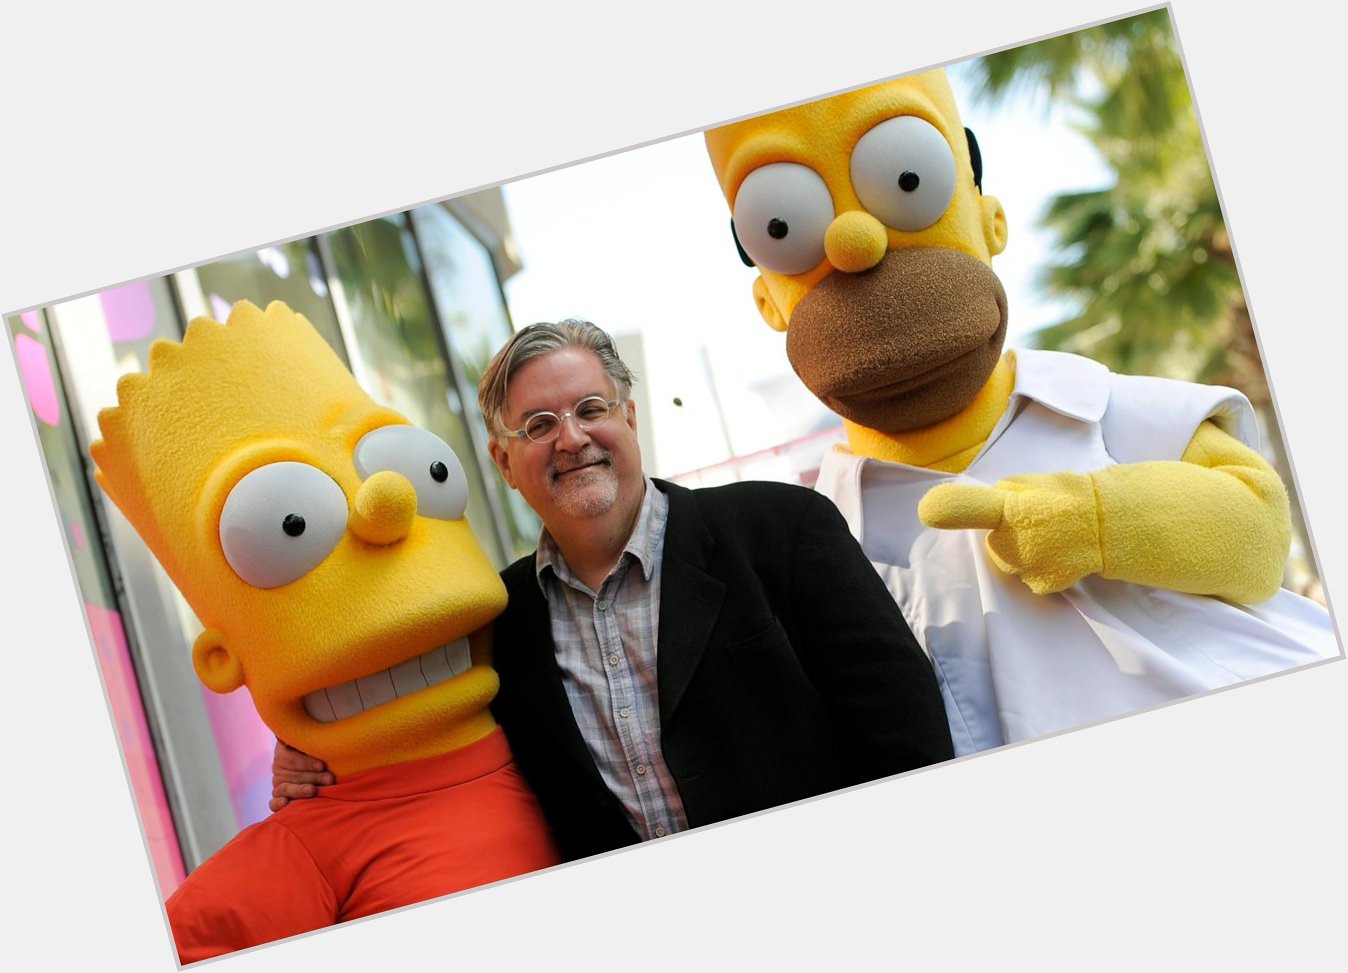 Happy Birthday to Matt Groening! Creator of The Simpsons, Futurama, and Disenchantment!

Hope it\s a good one! 